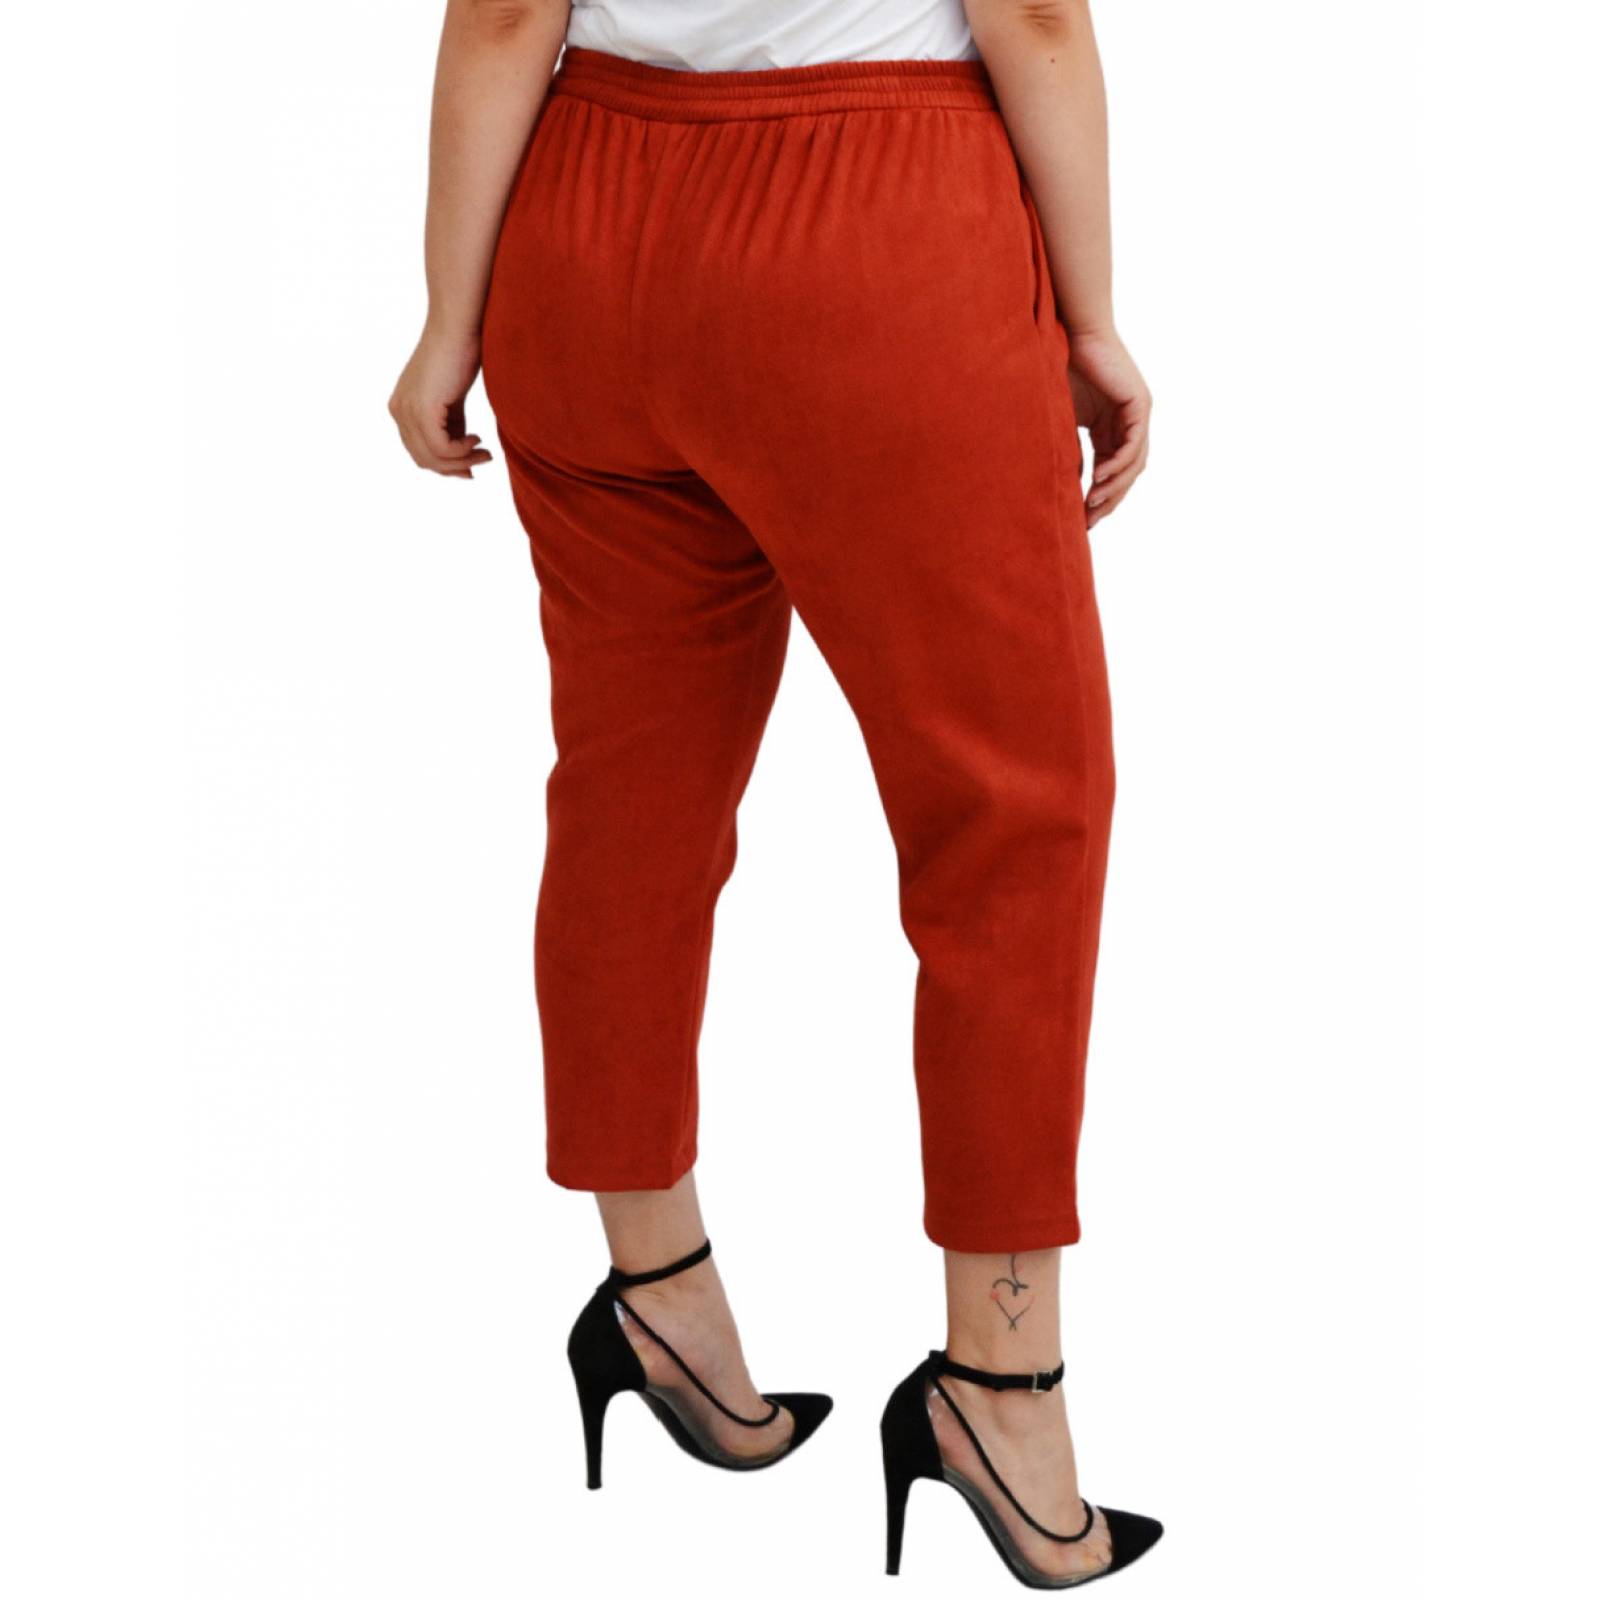 L04800 - Pantalón Capri amplio para Dama Color Rojo T 28 a 38